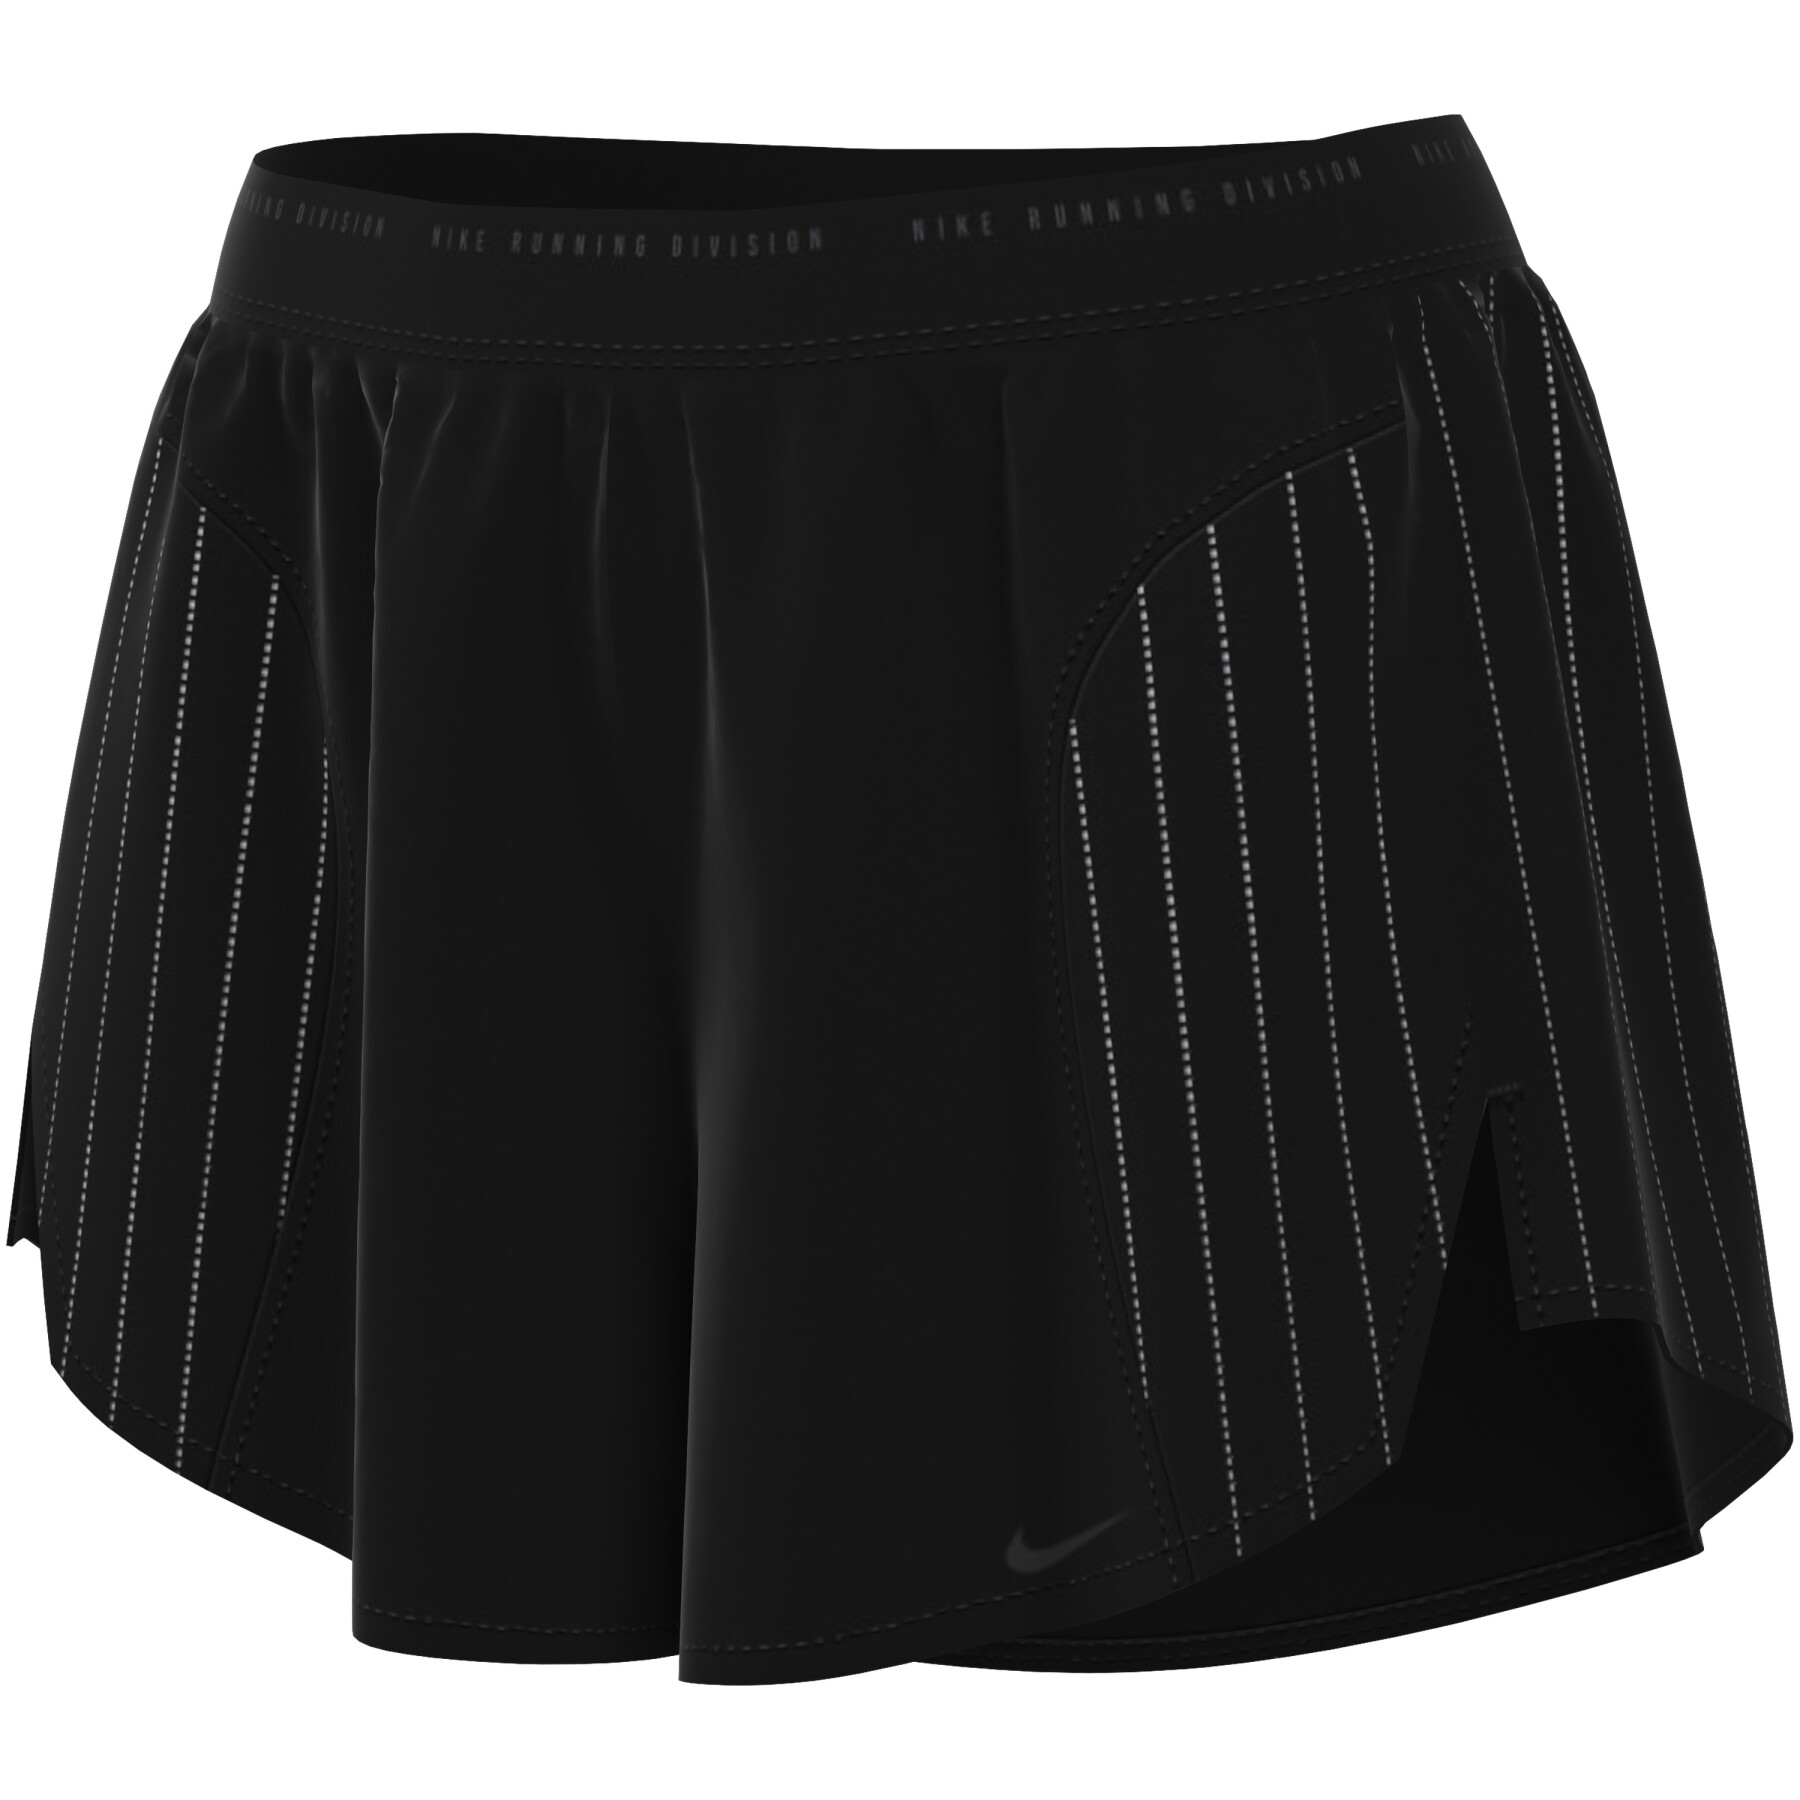 Women's shorts Nike Running Division